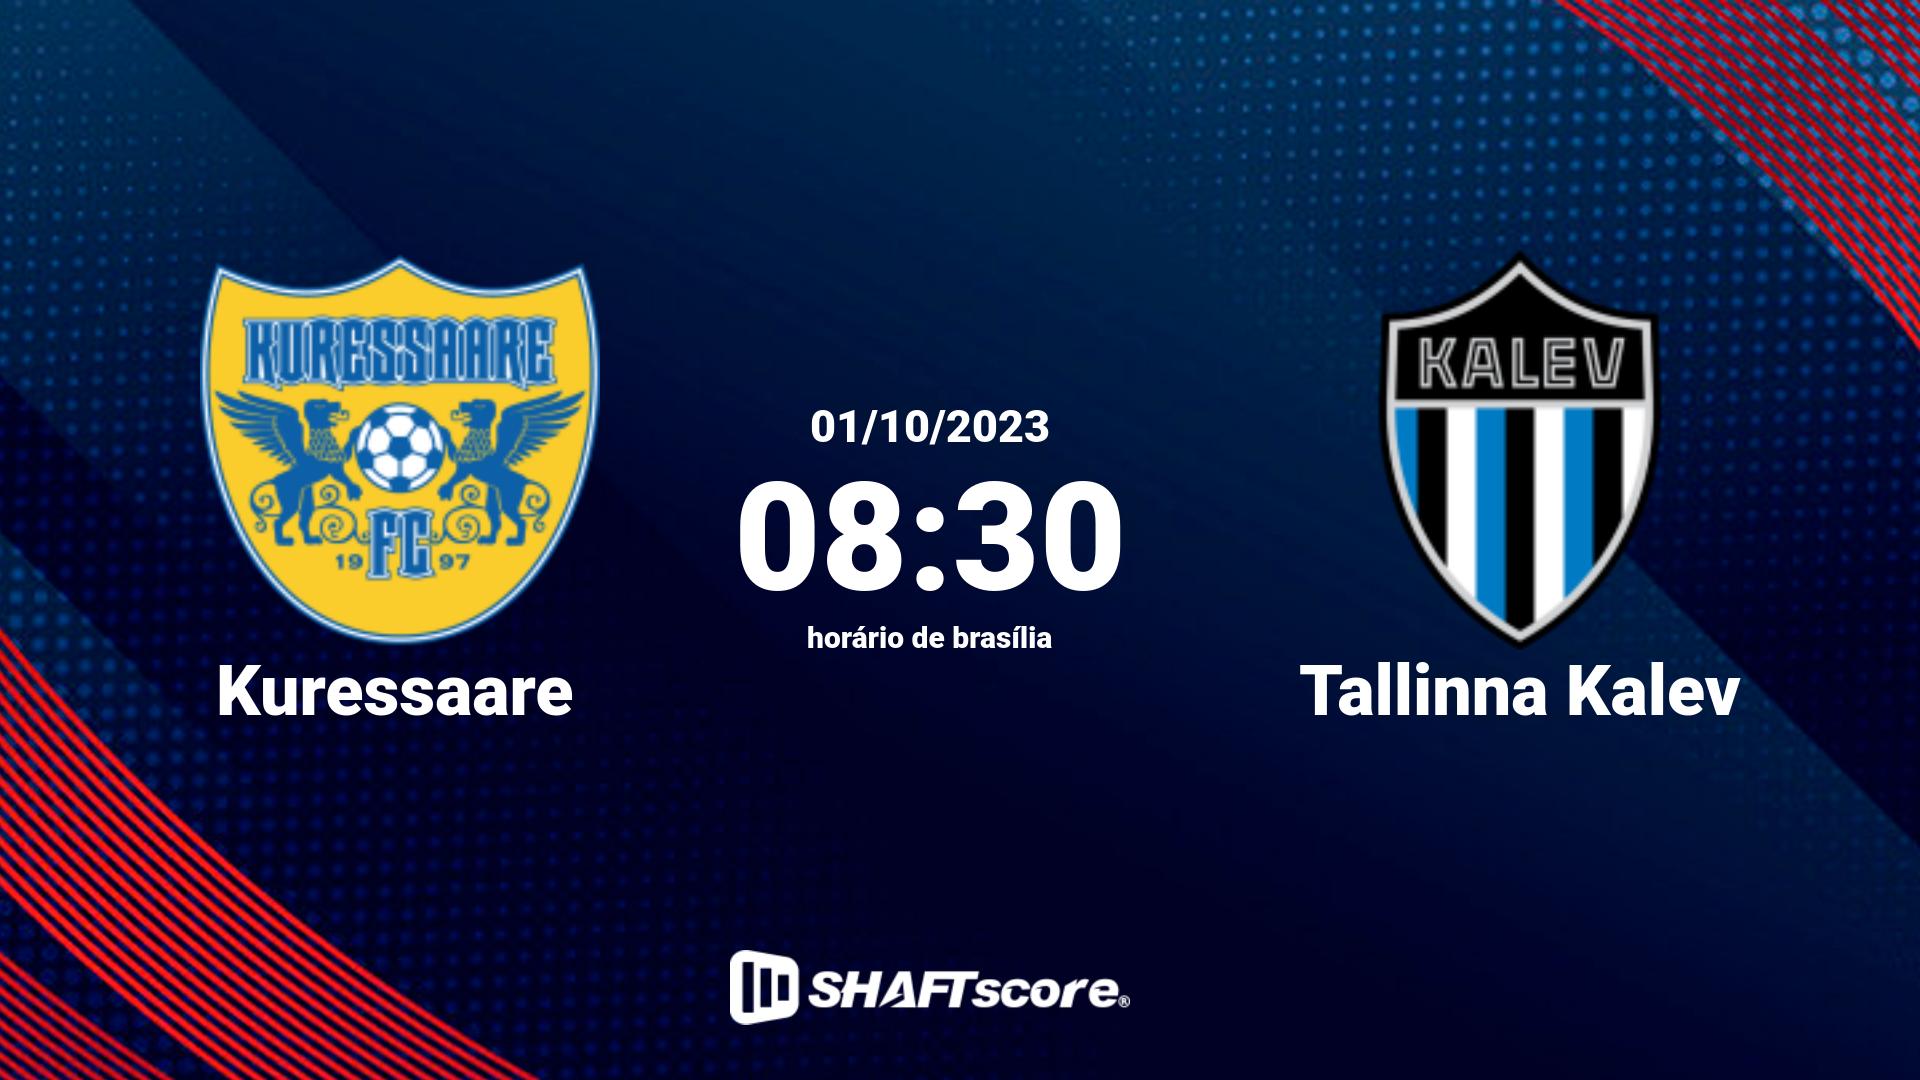 Estatísticas do jogo Kuressaare vs Tallinna Kalev 01.10 08:30